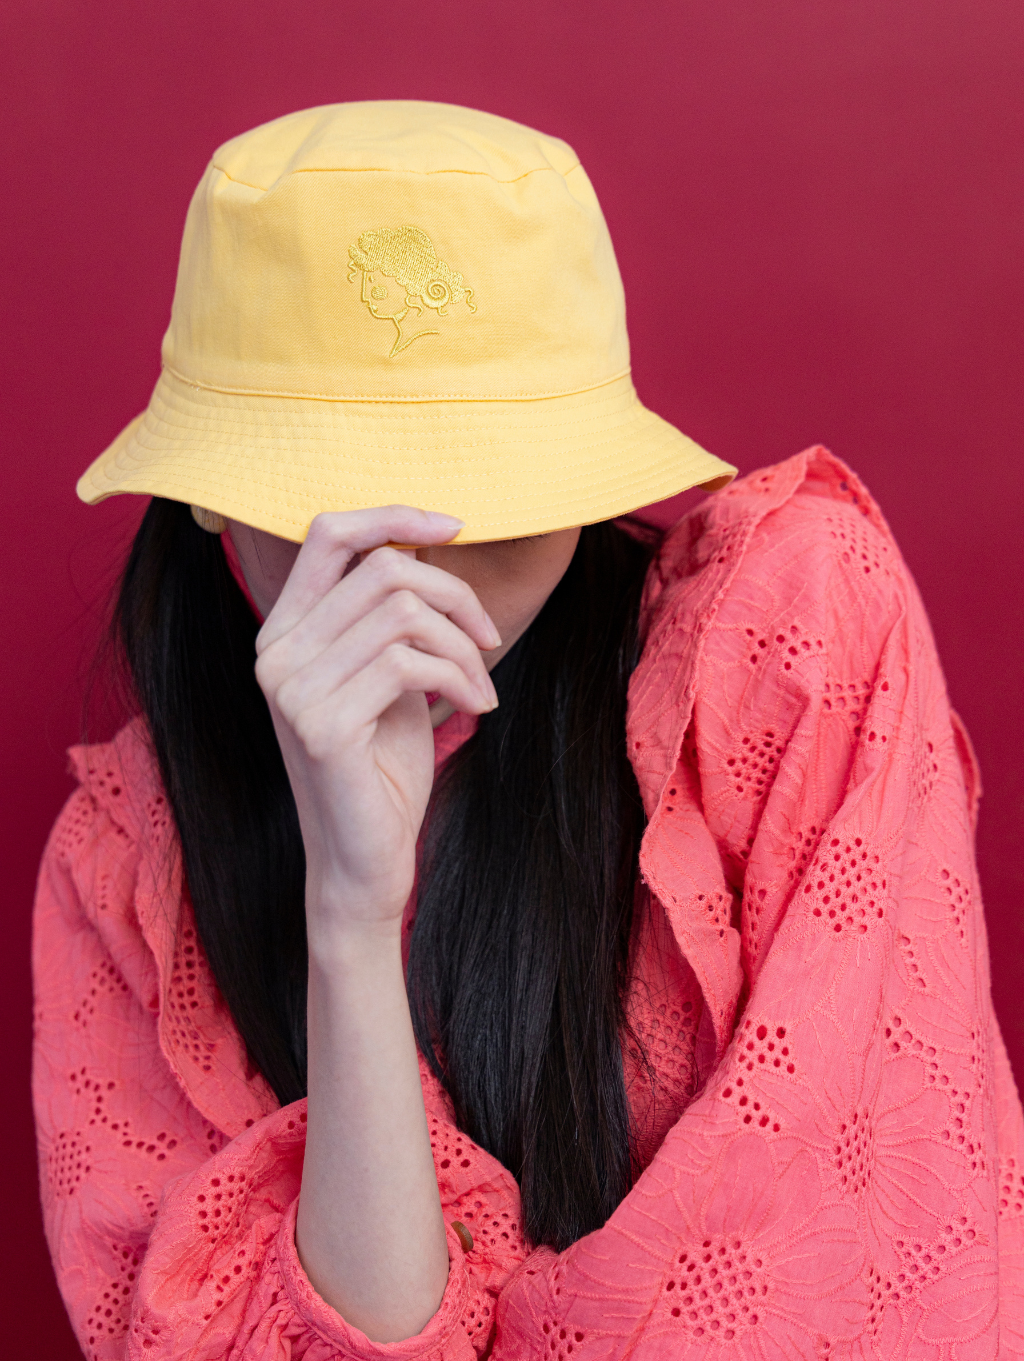 Cardi Hat - Yellow